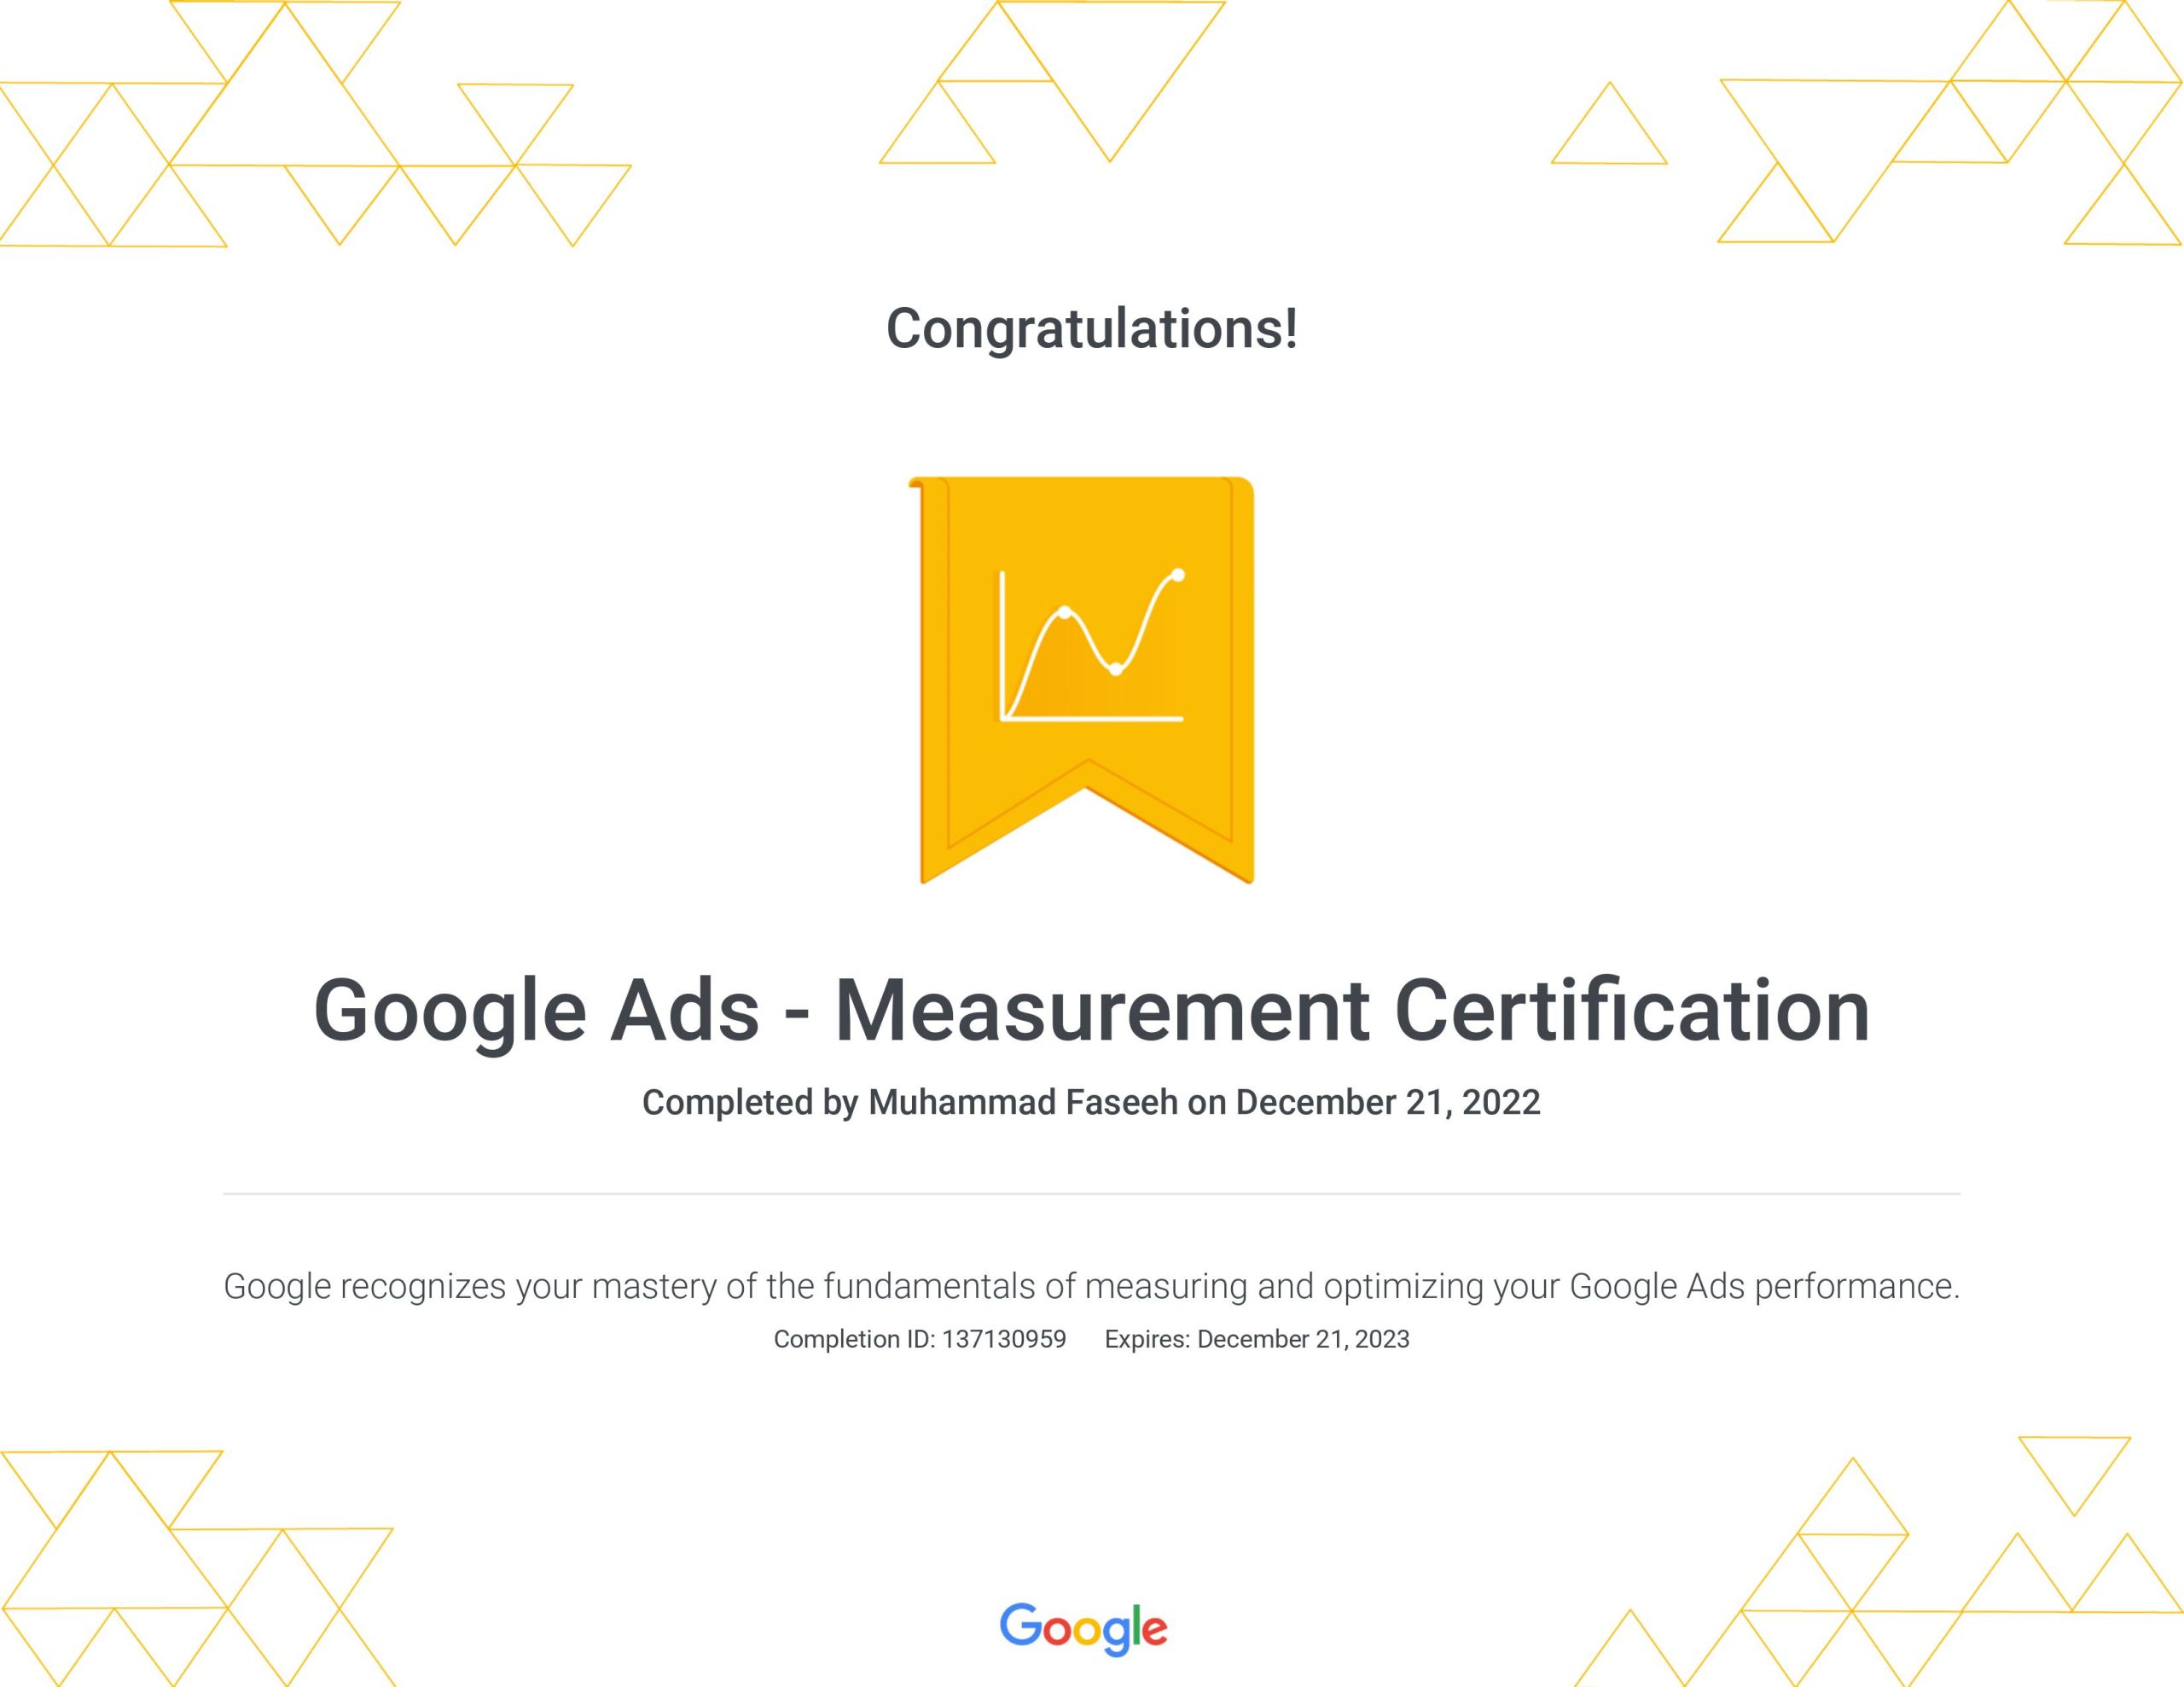 Google Ads - Measurement Certification _ Google-1